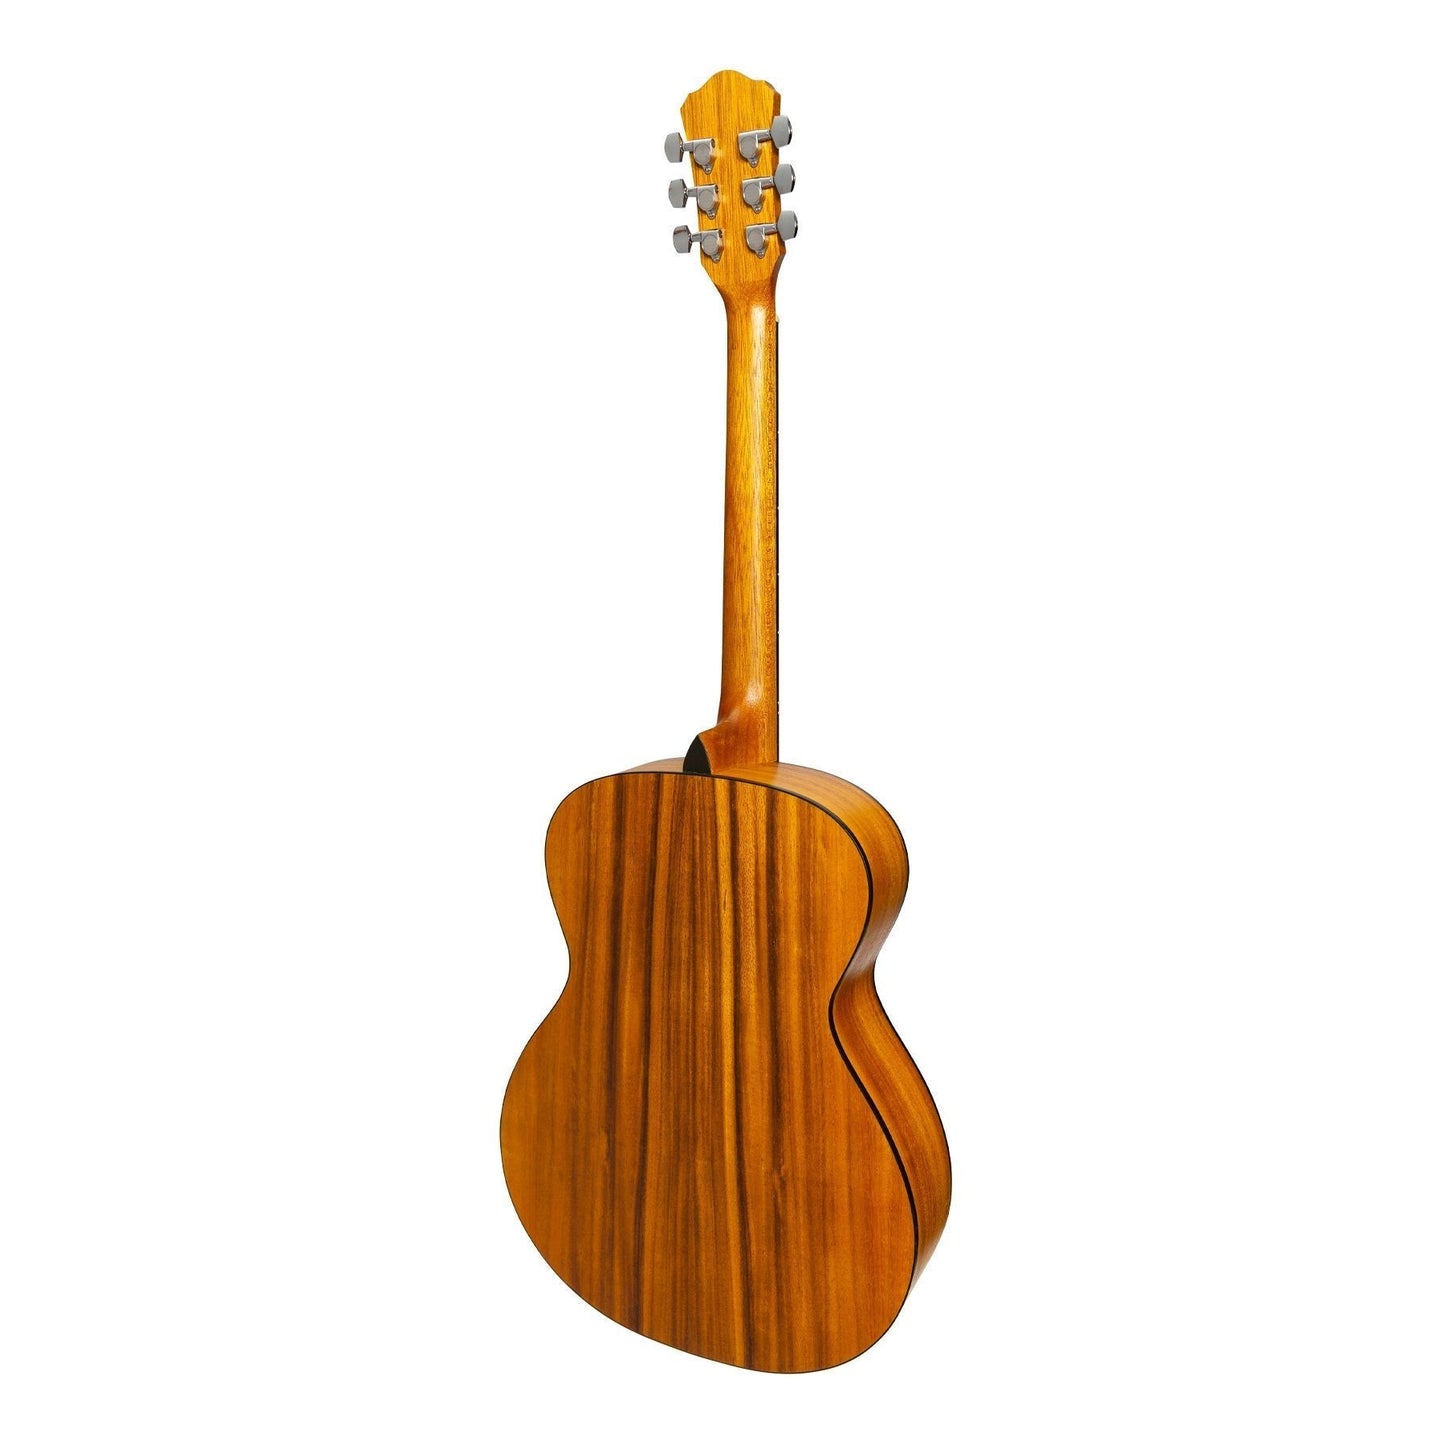 Martinez '41 Series' Folk Size Acoustic Guitar with Built-in Tuner (Koa)